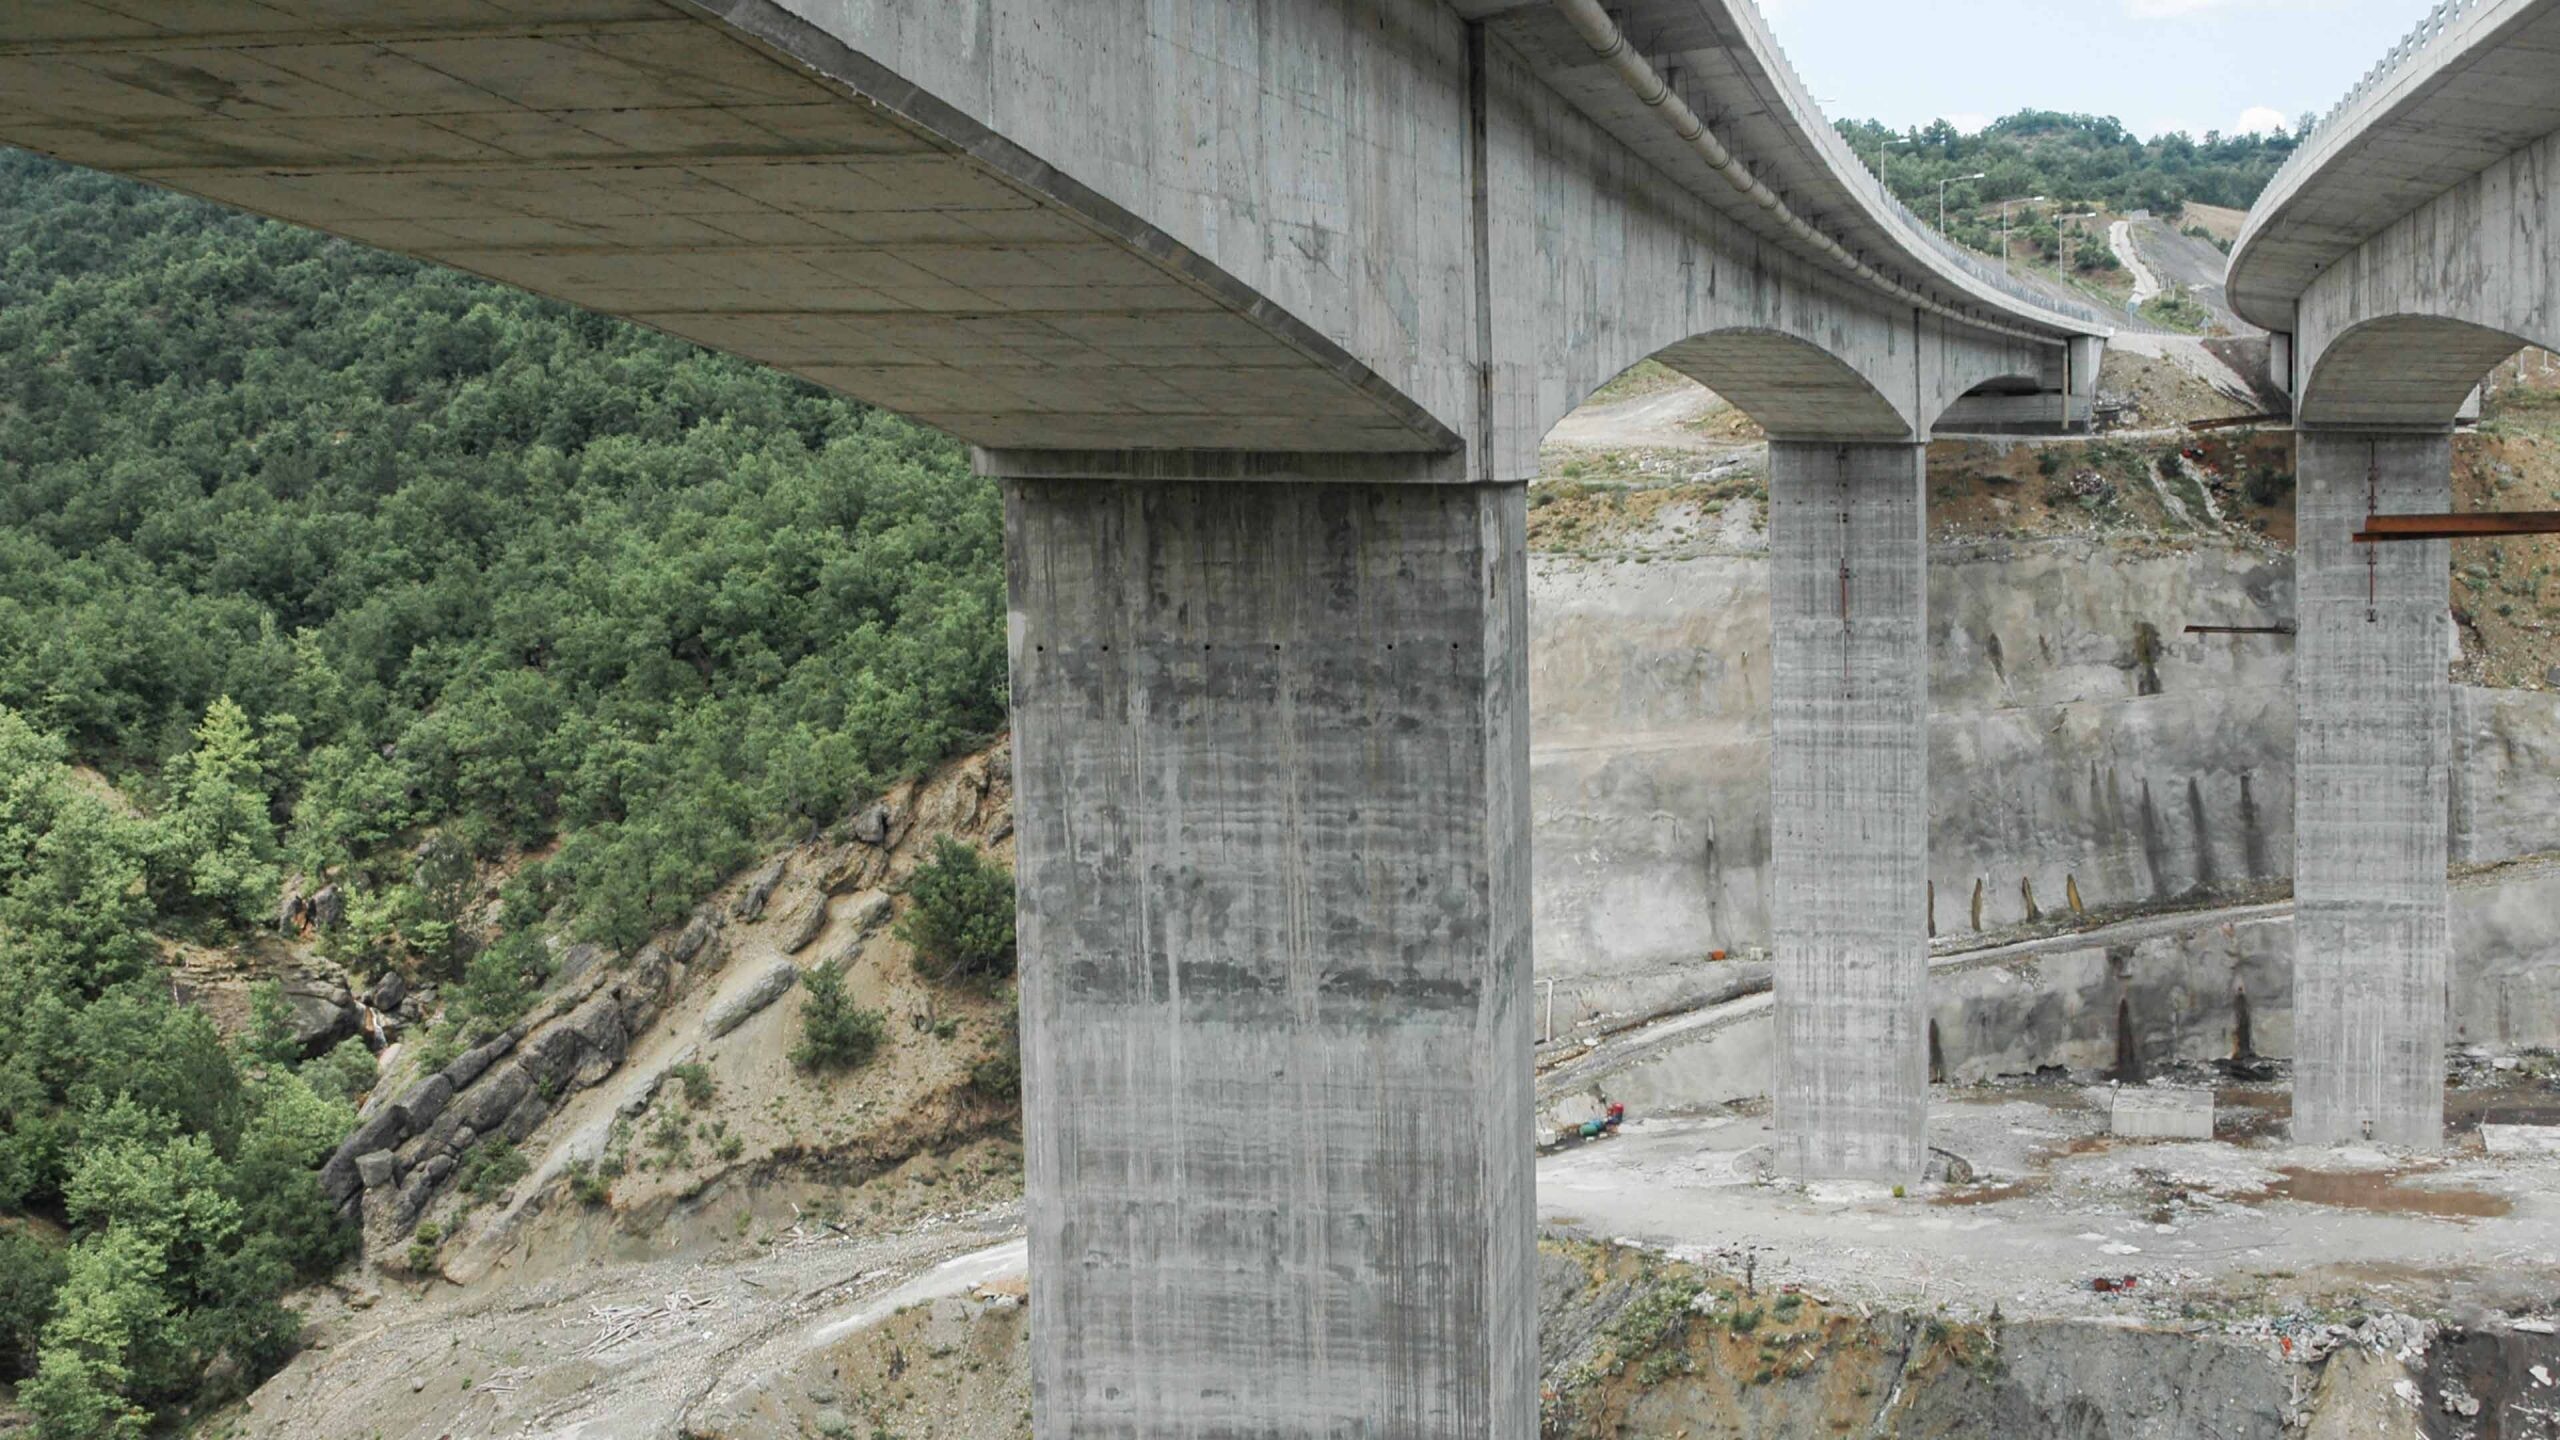 More information about "Από τις 17.000 γέφυρες της χώρας οι 3.000 δεν ελέγχονται συστηματικά"